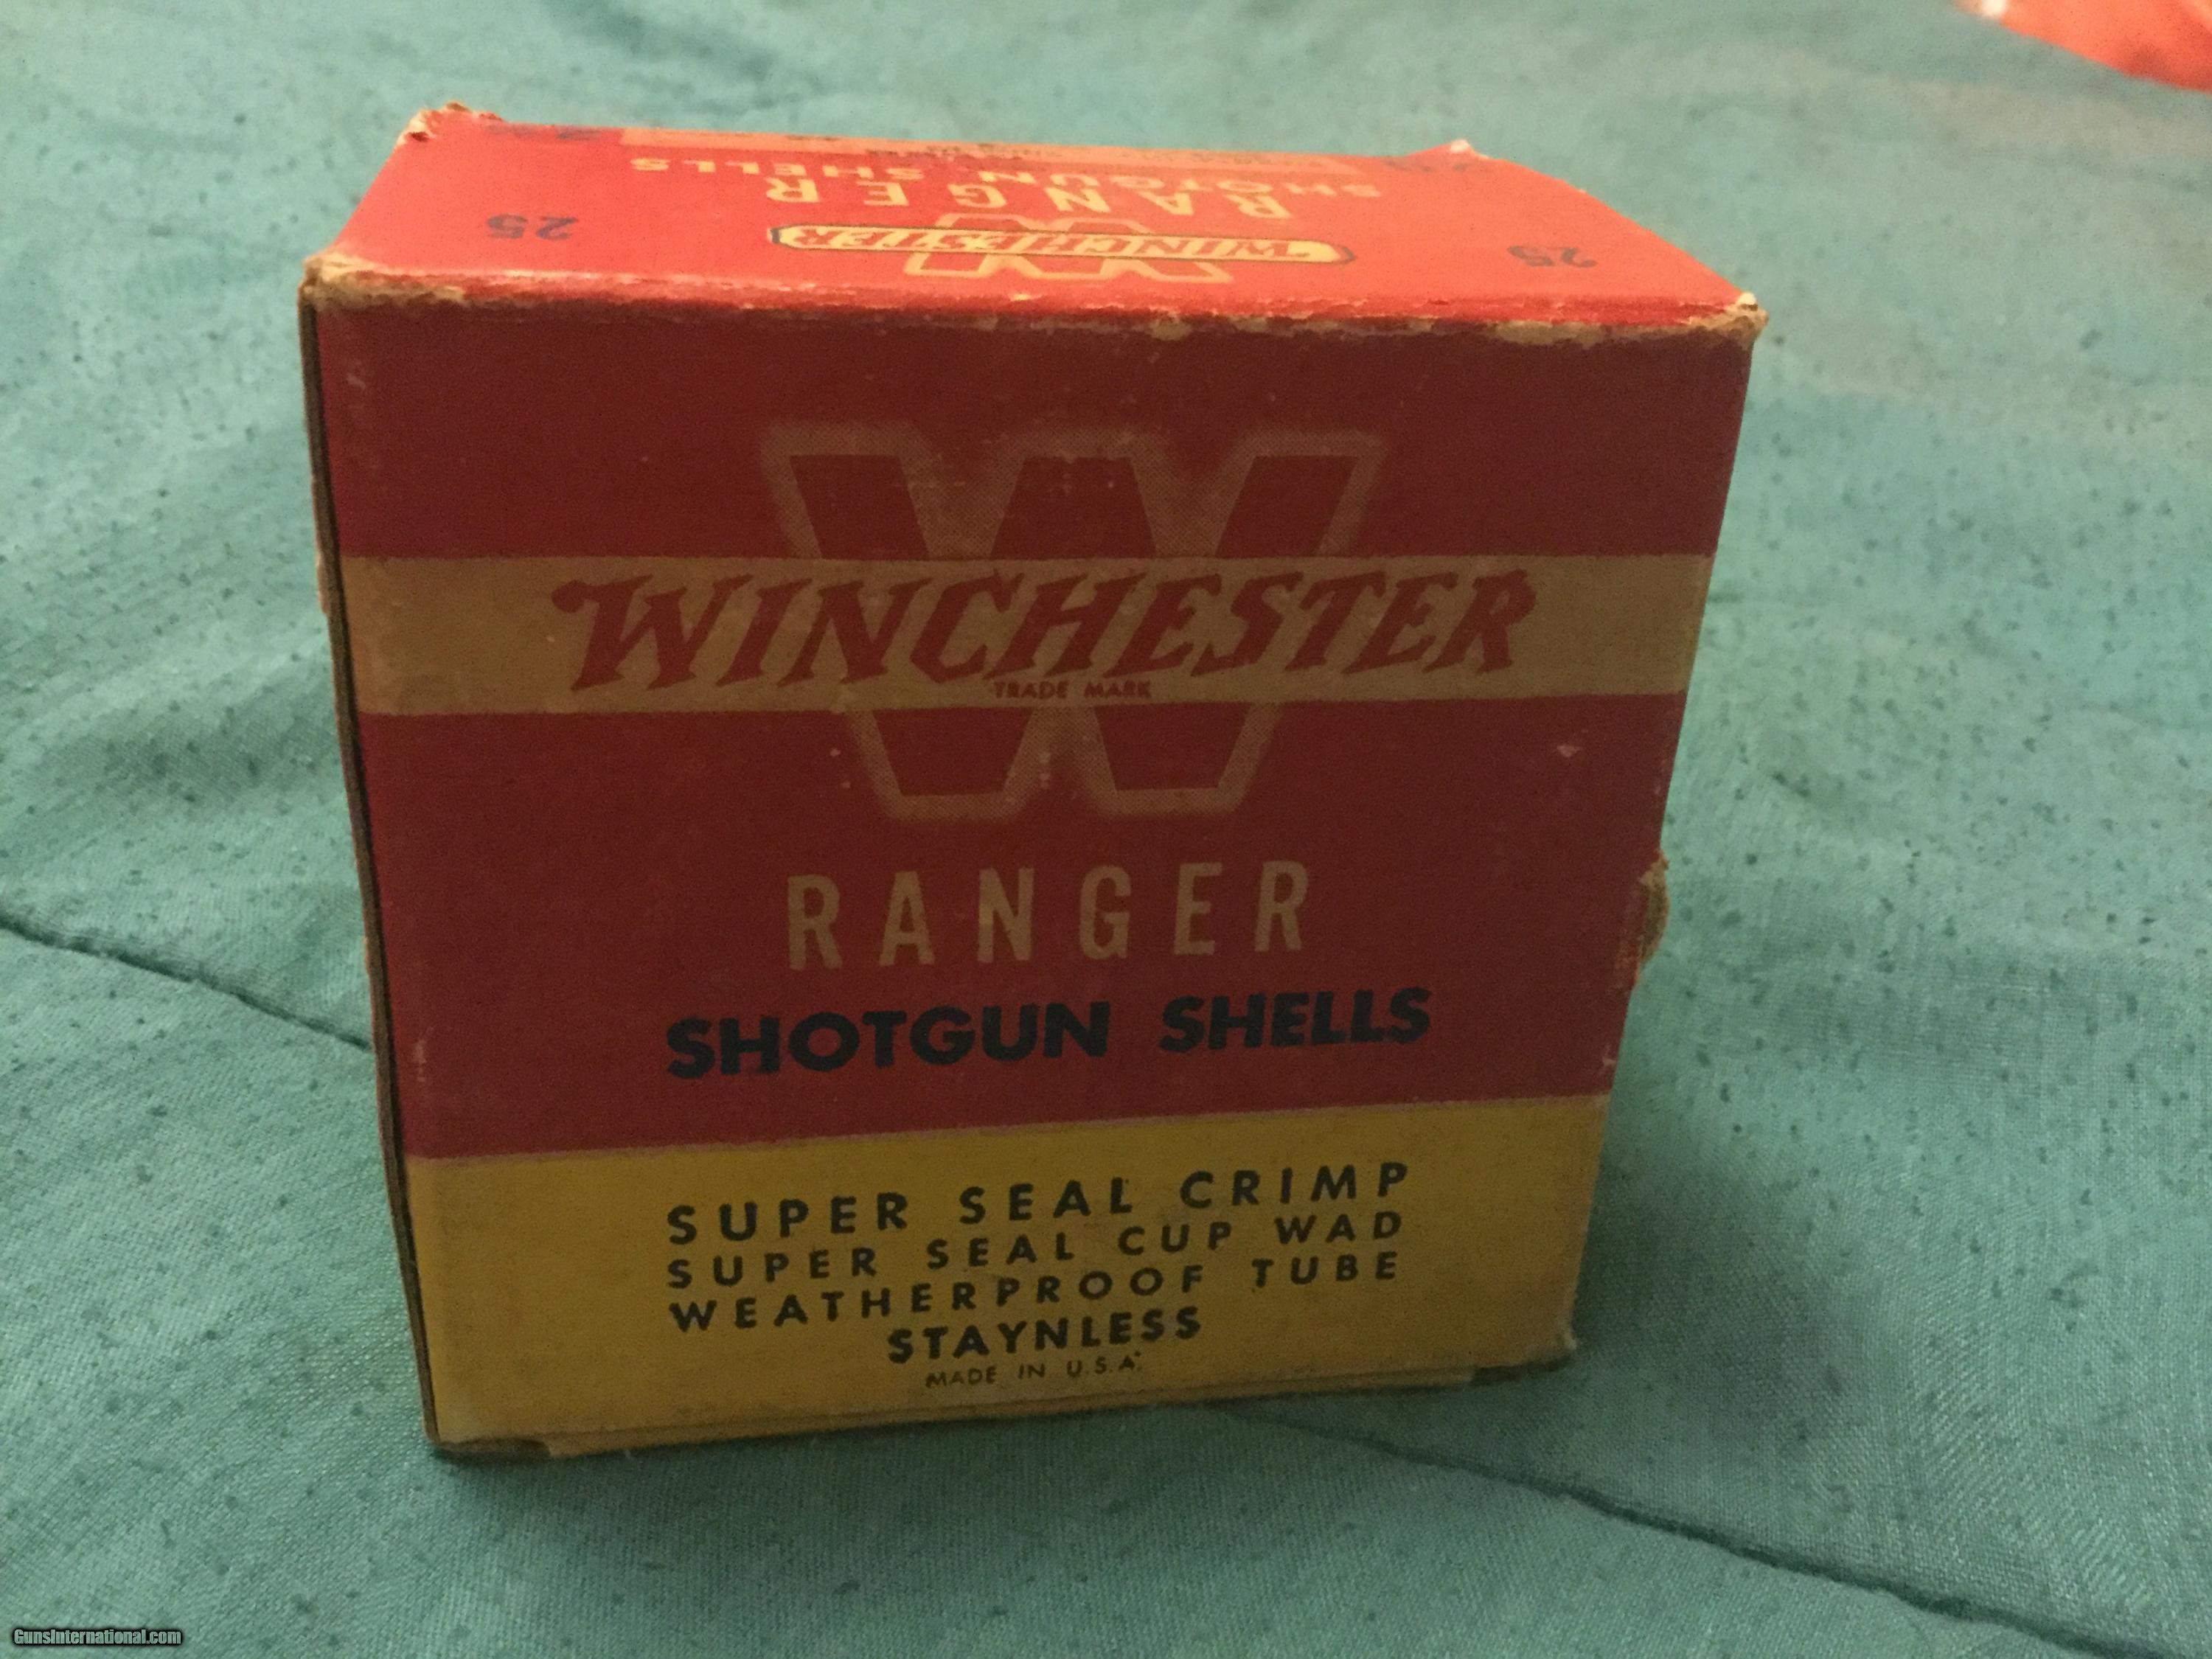 Winchester,Ranger shot shells,20 gauge,2.5 dram,1oz,8 shot